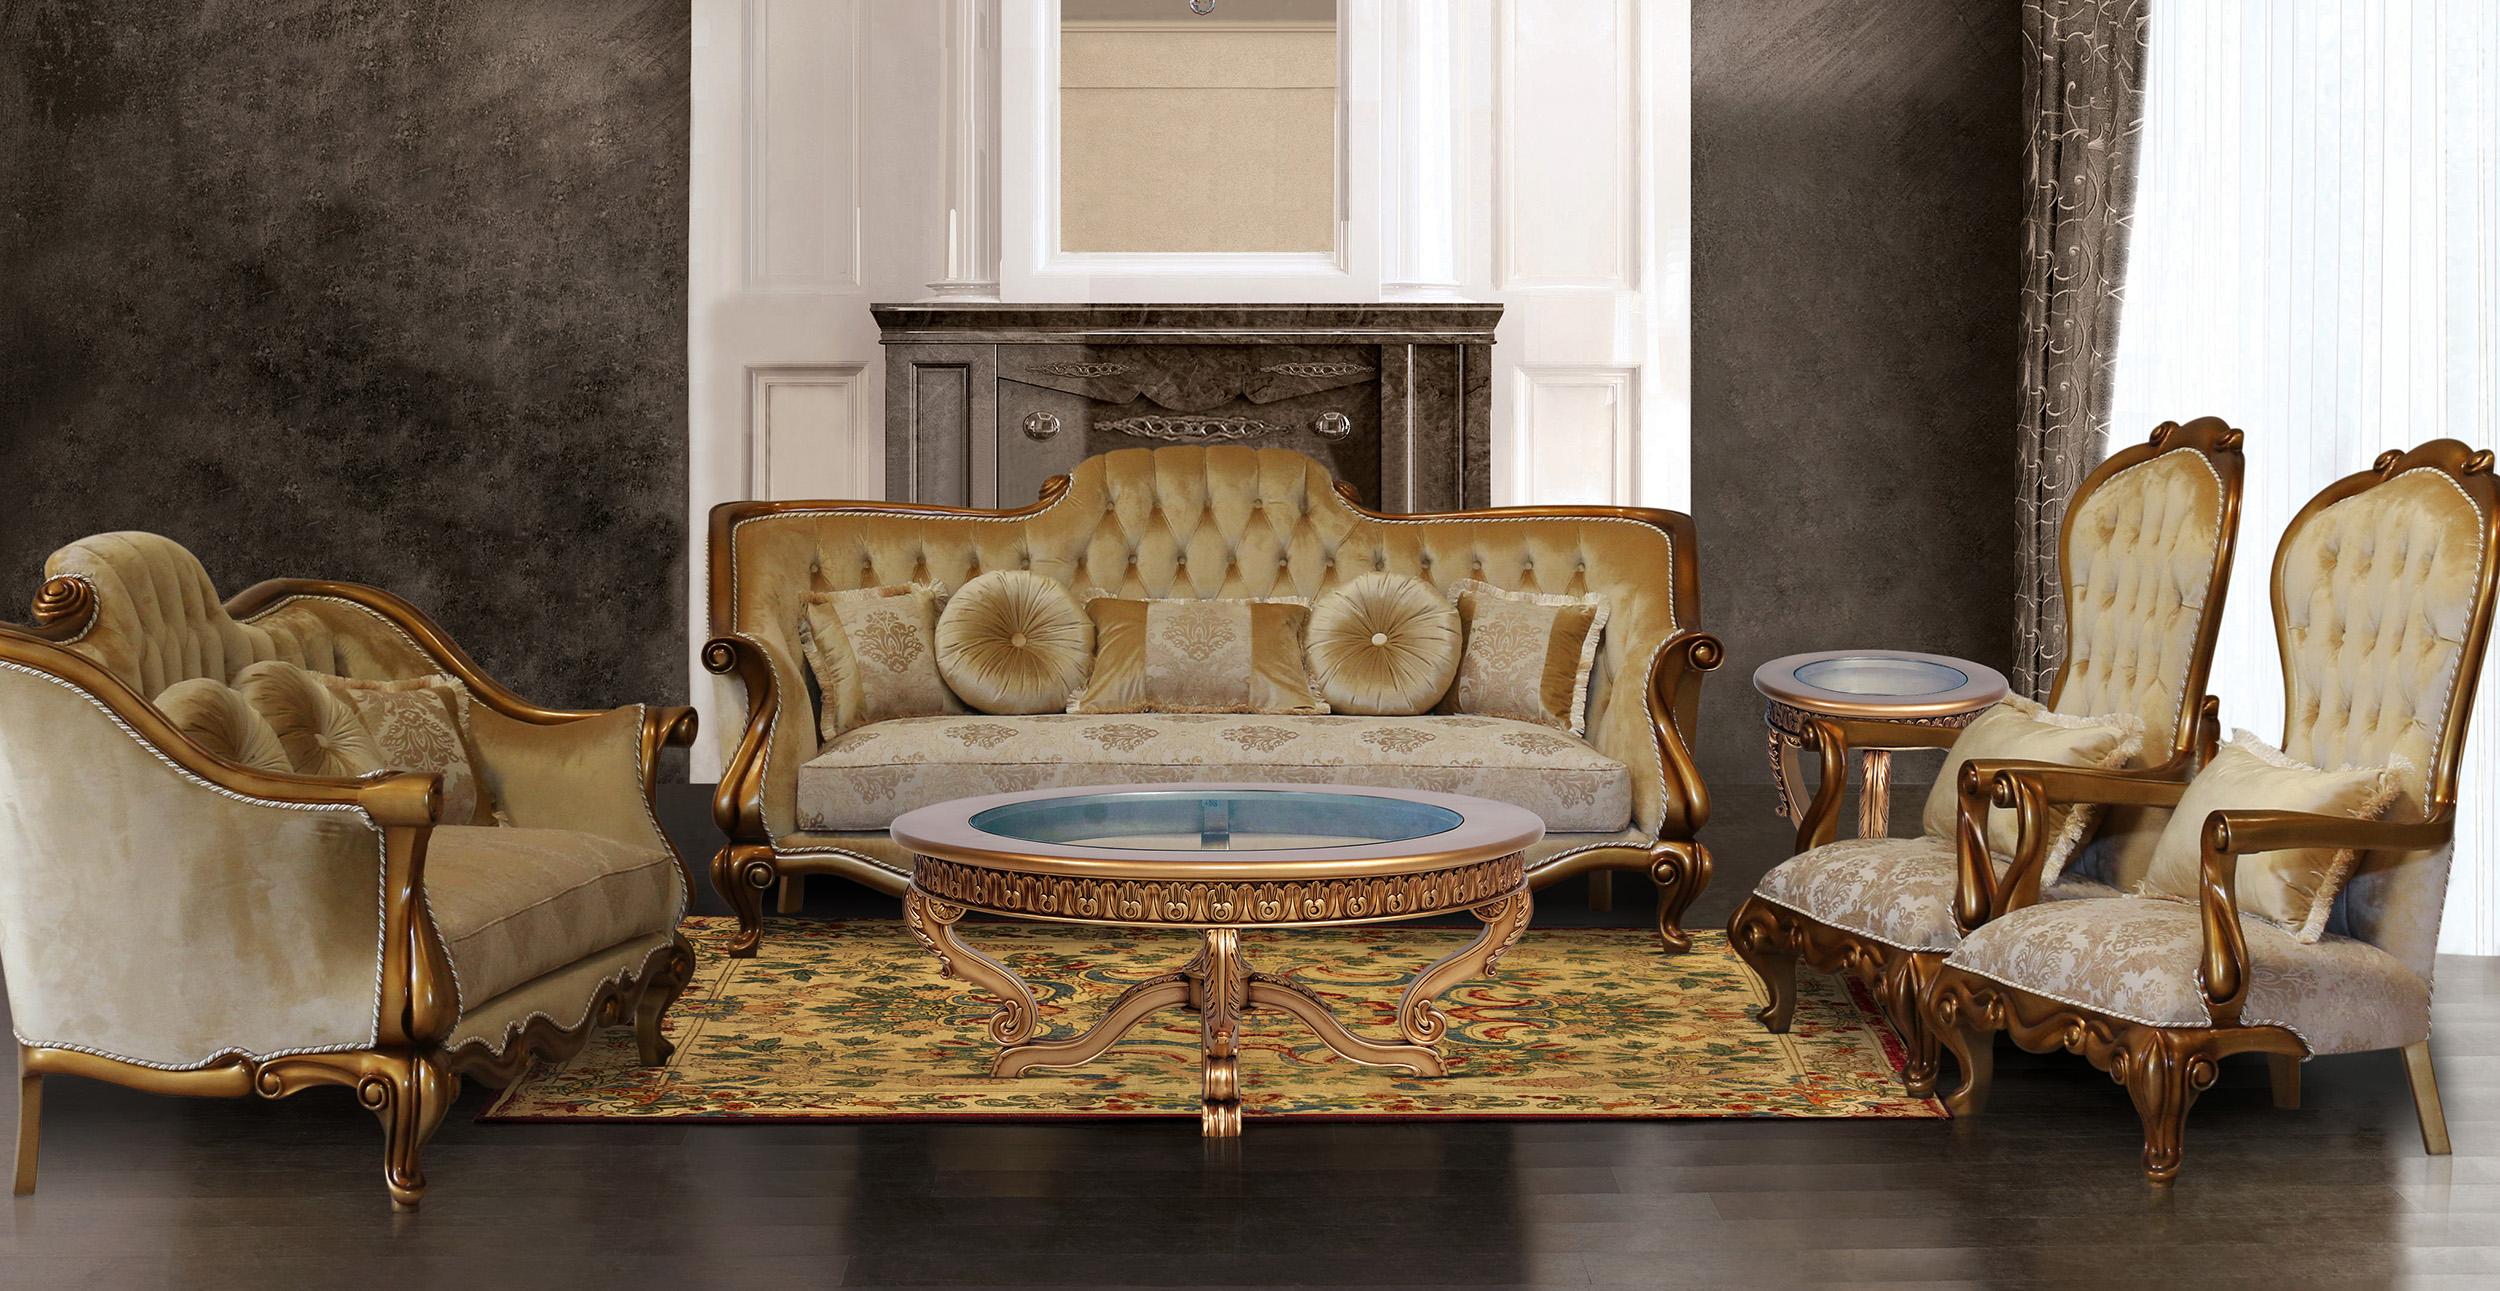 

    
41951-C Luxury Gold & Bronze CARLOTTA Chair EUROPEAN FURNITURE Traditional Classic
